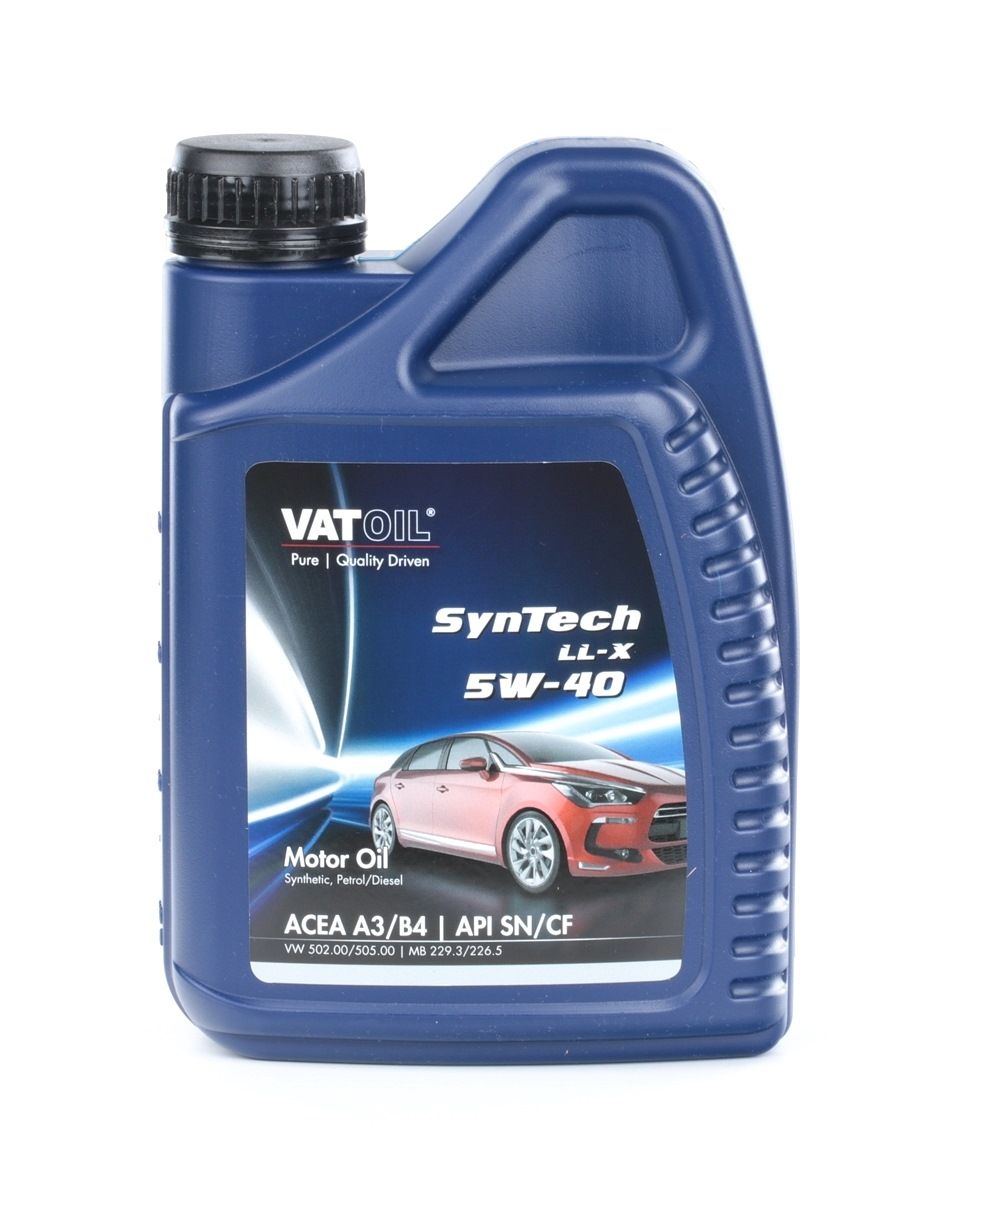 VATOIL SynTech, LL-X 50034 Engine oil 5W-40, 1l, Synthetic Oil